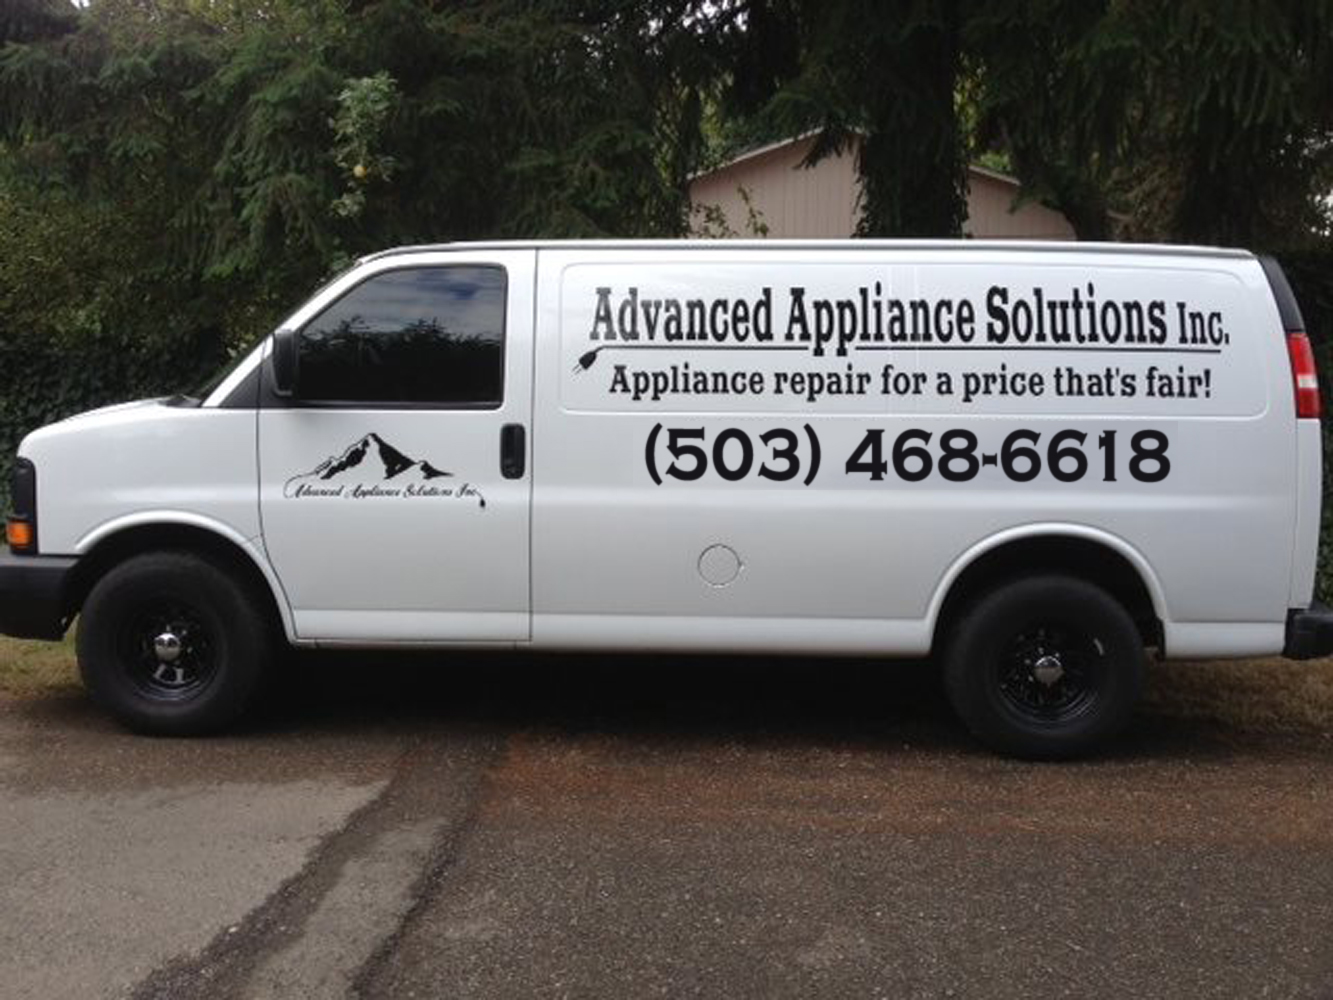 The Advanced Appliance Solutions Inc. van